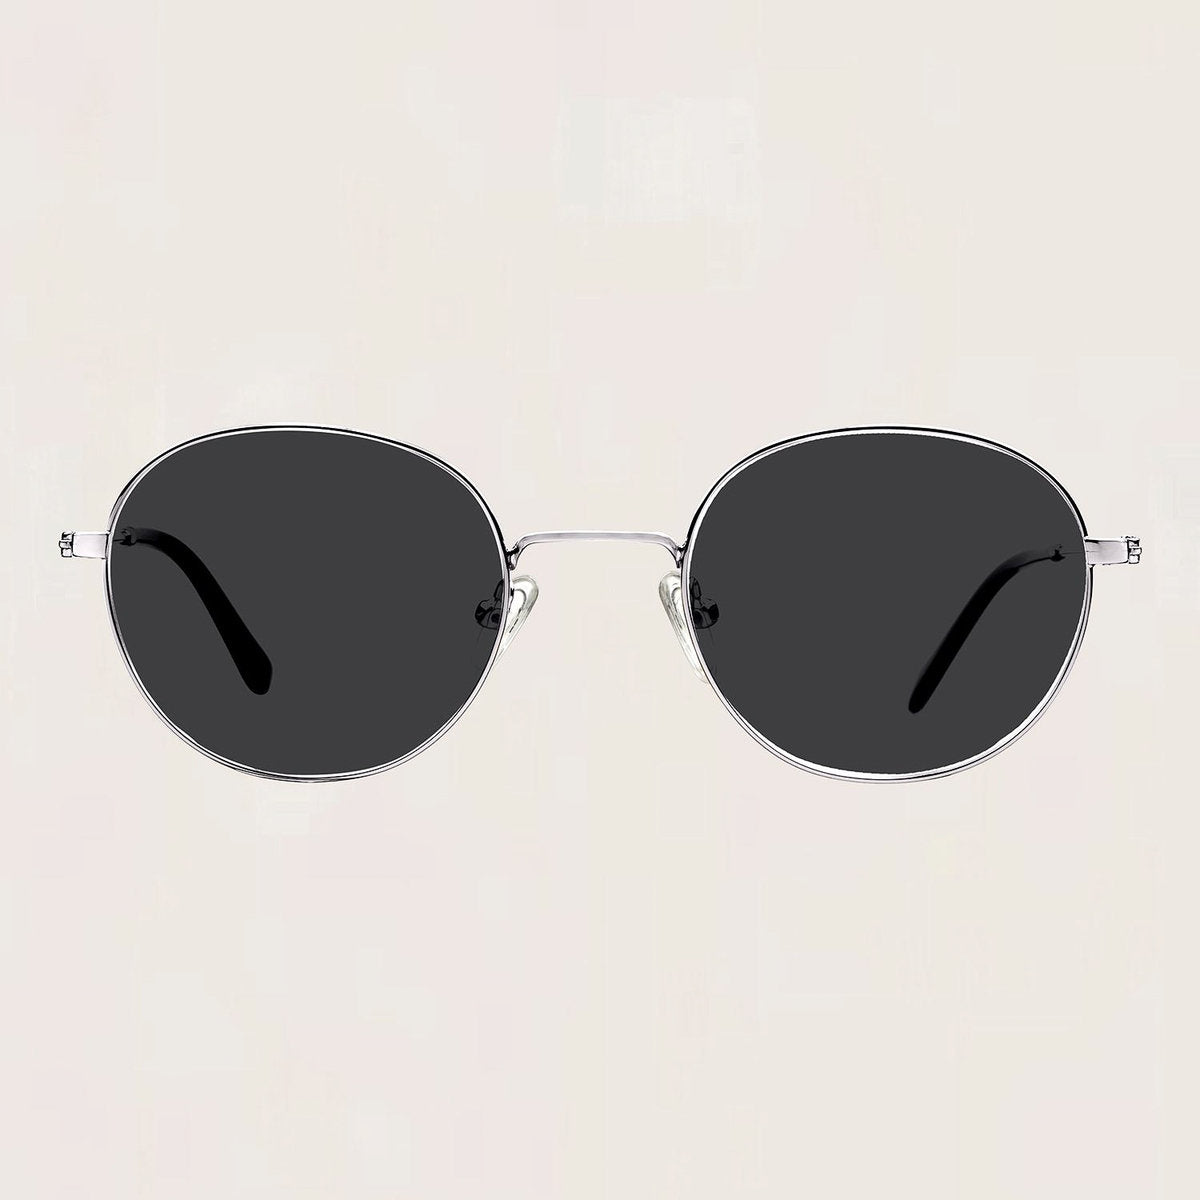 Mads Sunglasses - Silver & Grey Lens